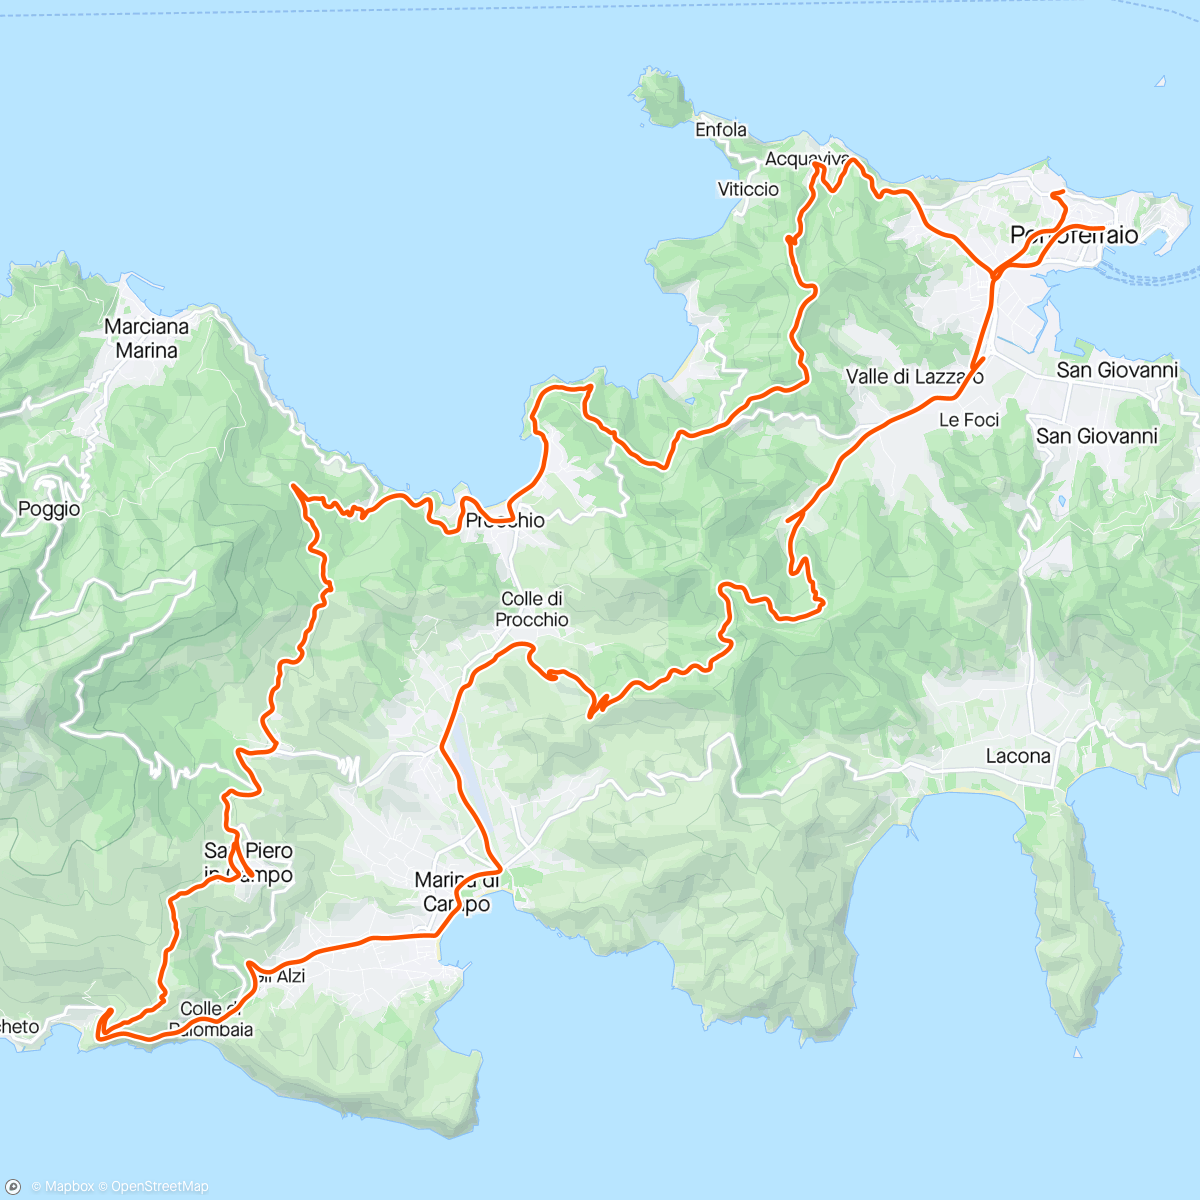 Map of the activity, Mtb isola d’Elba - Portoferraio-procchio-cavoli-colle reciso - portoferraio